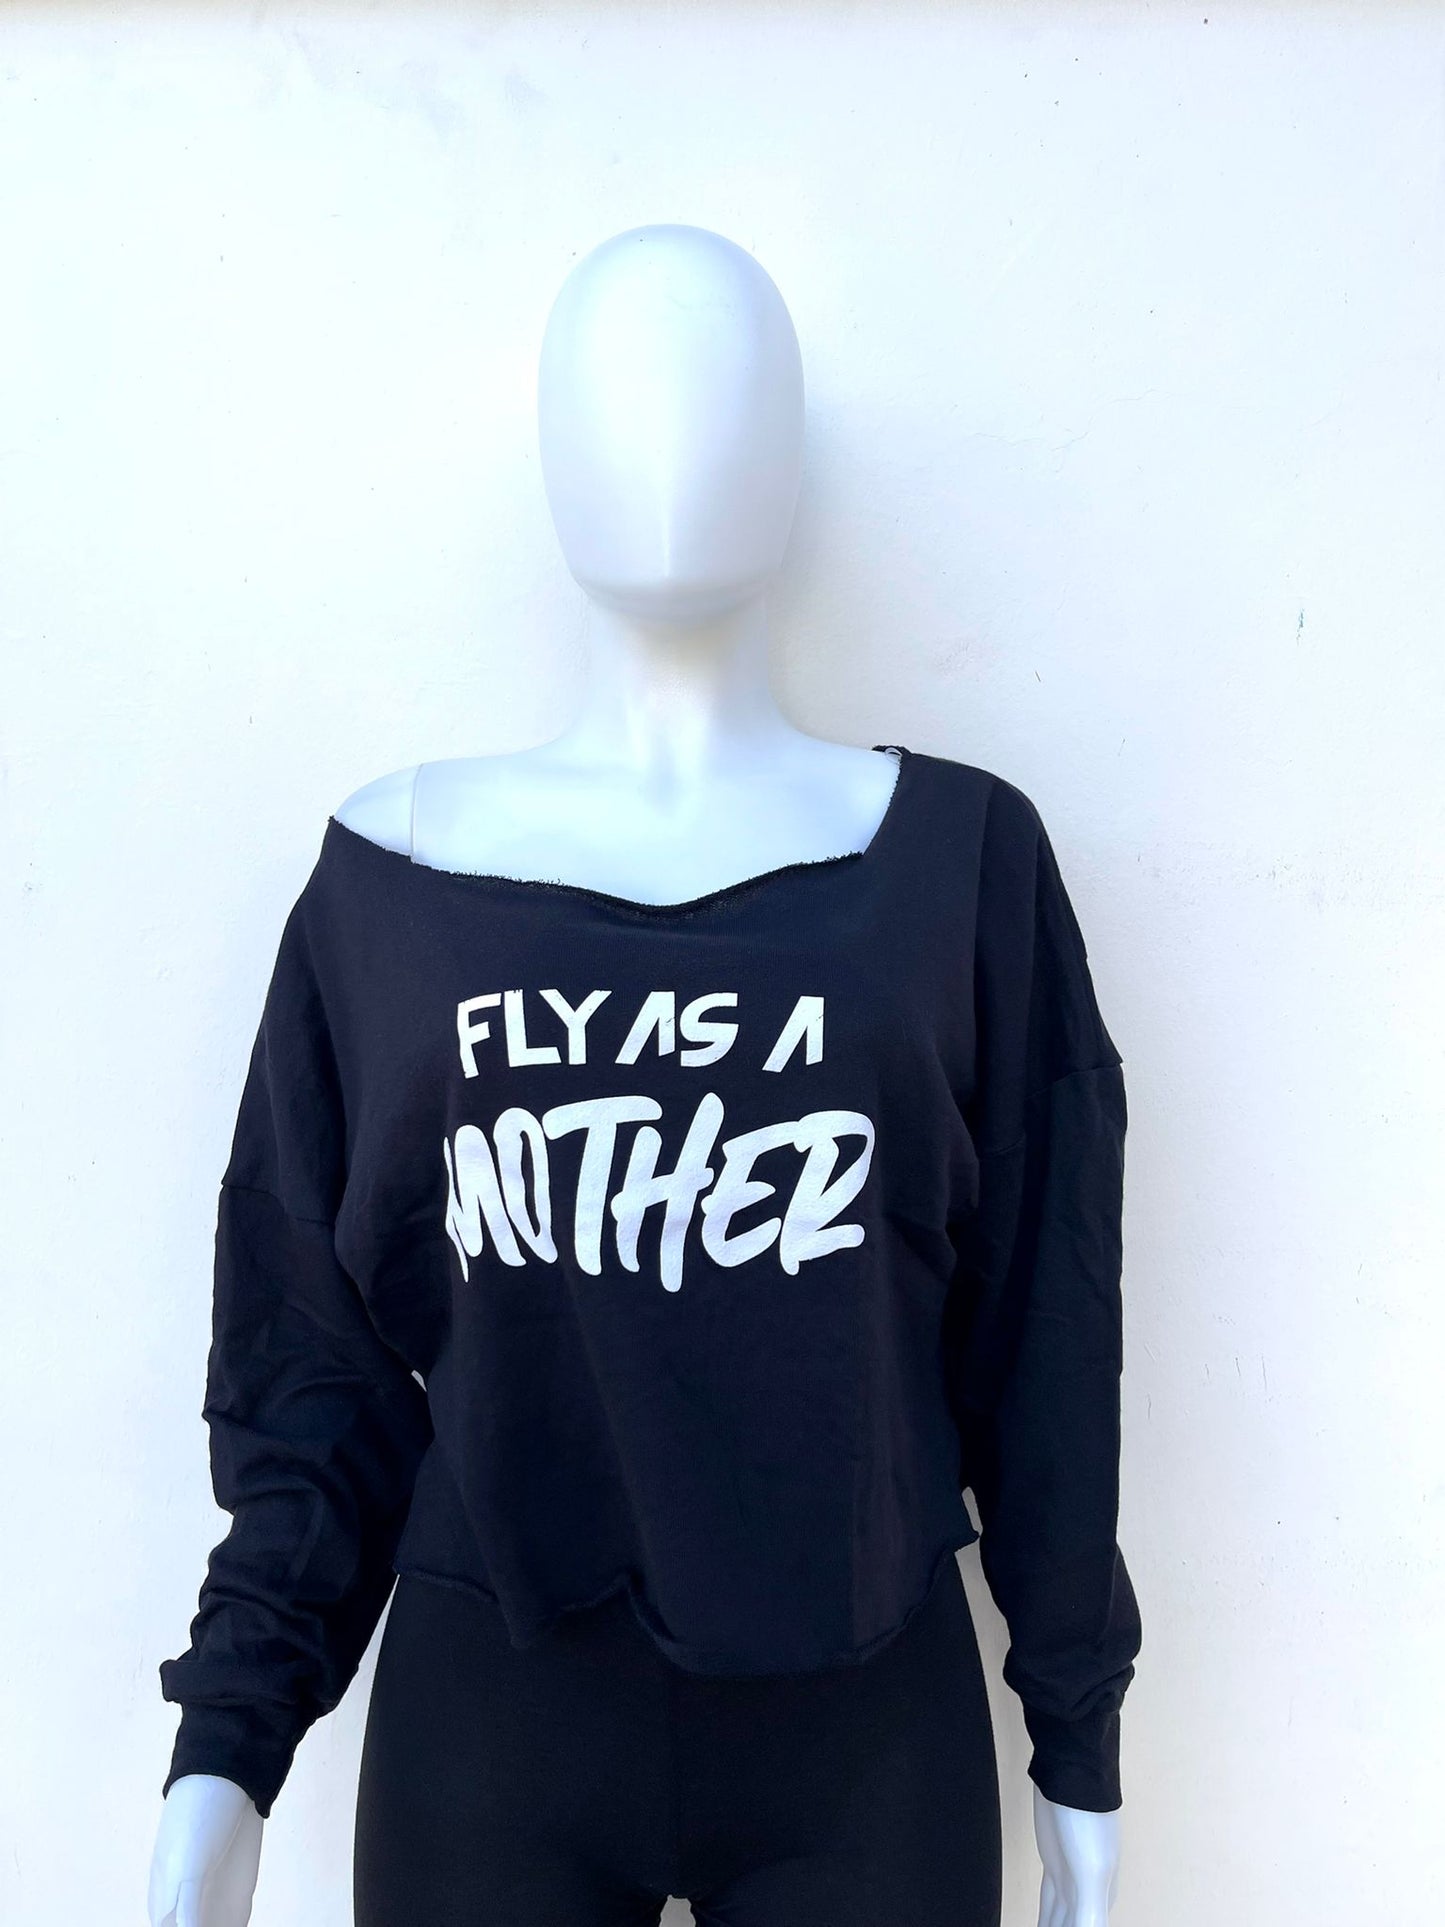 Top/sueter Fashion Nova original de color negro con letras FLY AS A MOTHER (volar como una madre )MOM OFF, manga larga.